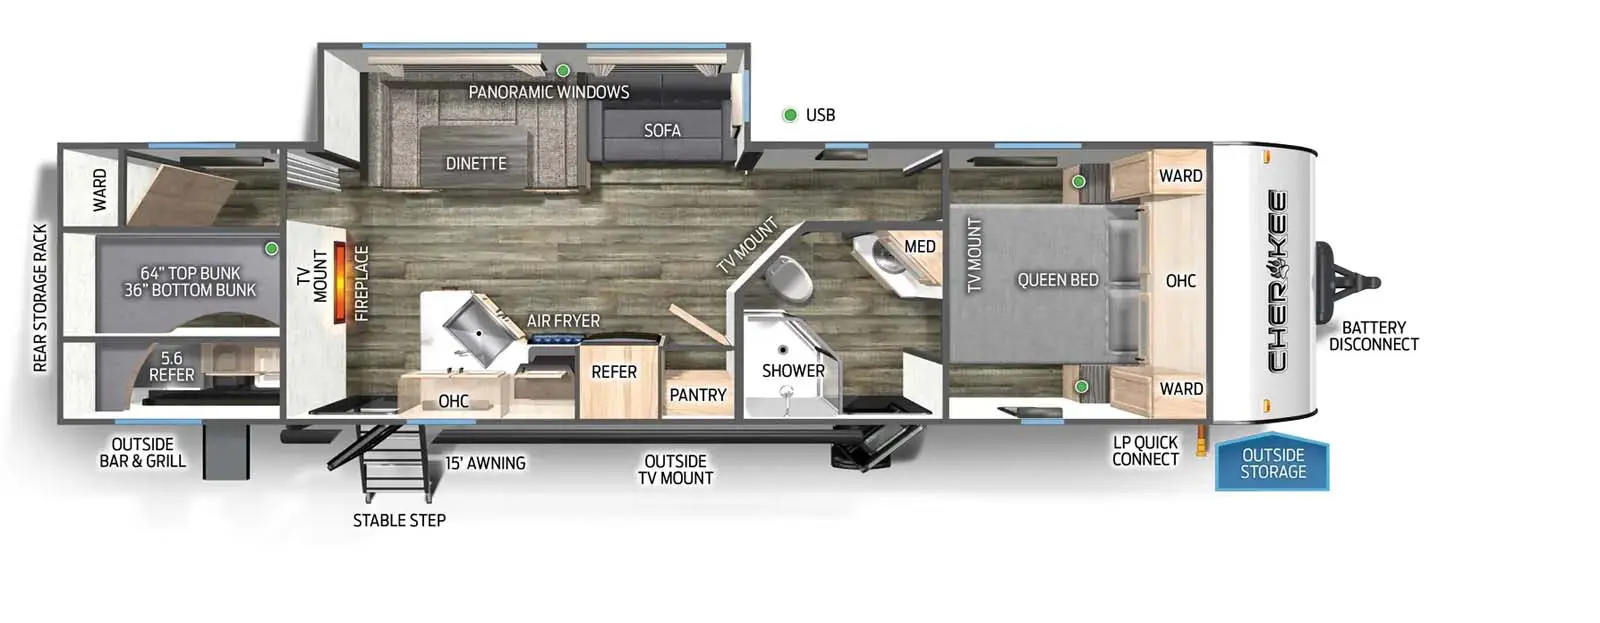 294GEBG Floorplan Image